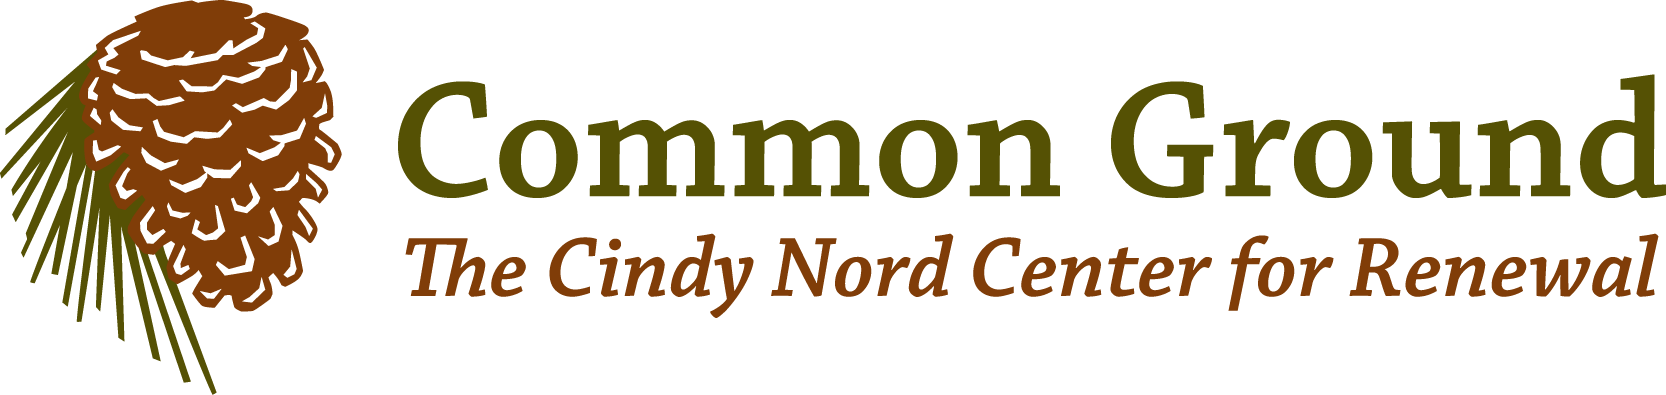 Common Ground or Common Ground Zipline Canopy Tour logo